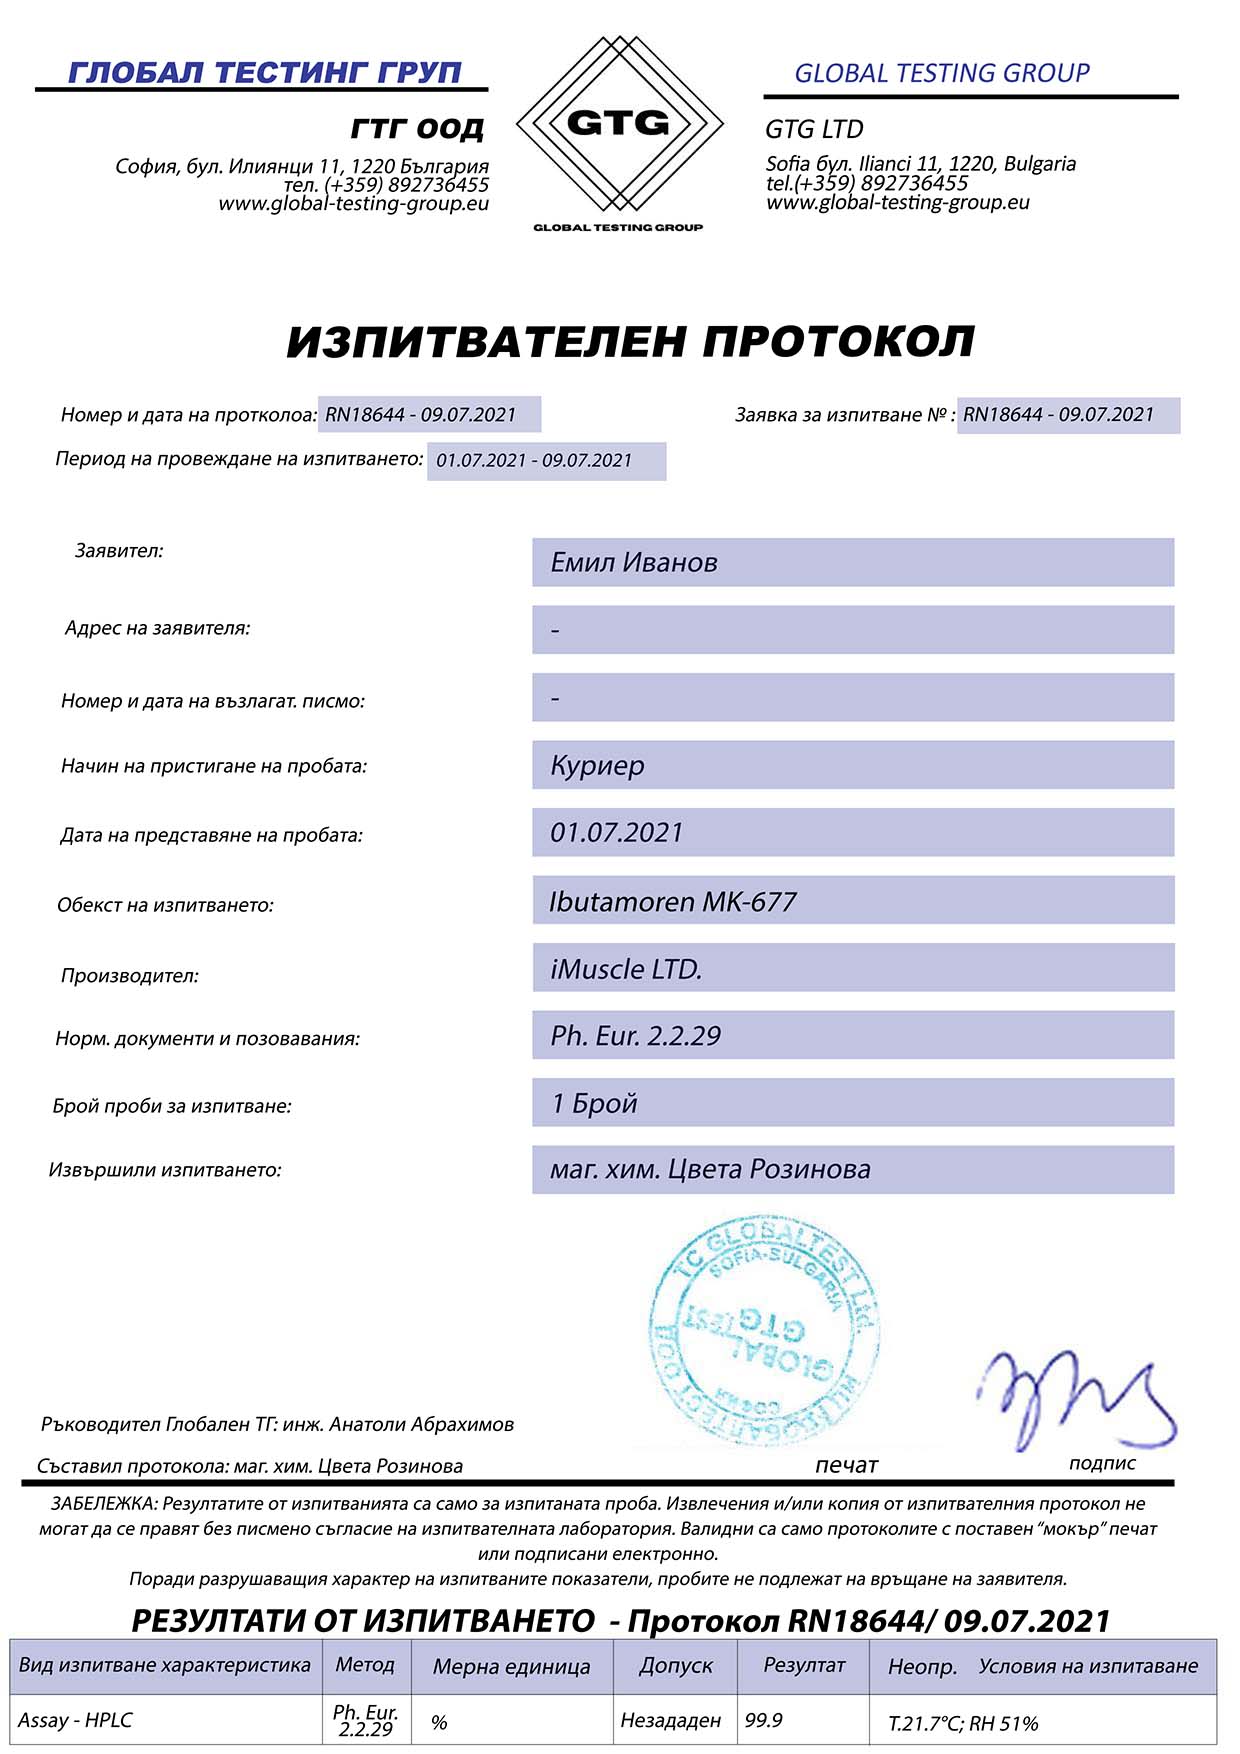 SARM Ibutamoren MK677 quality certificate